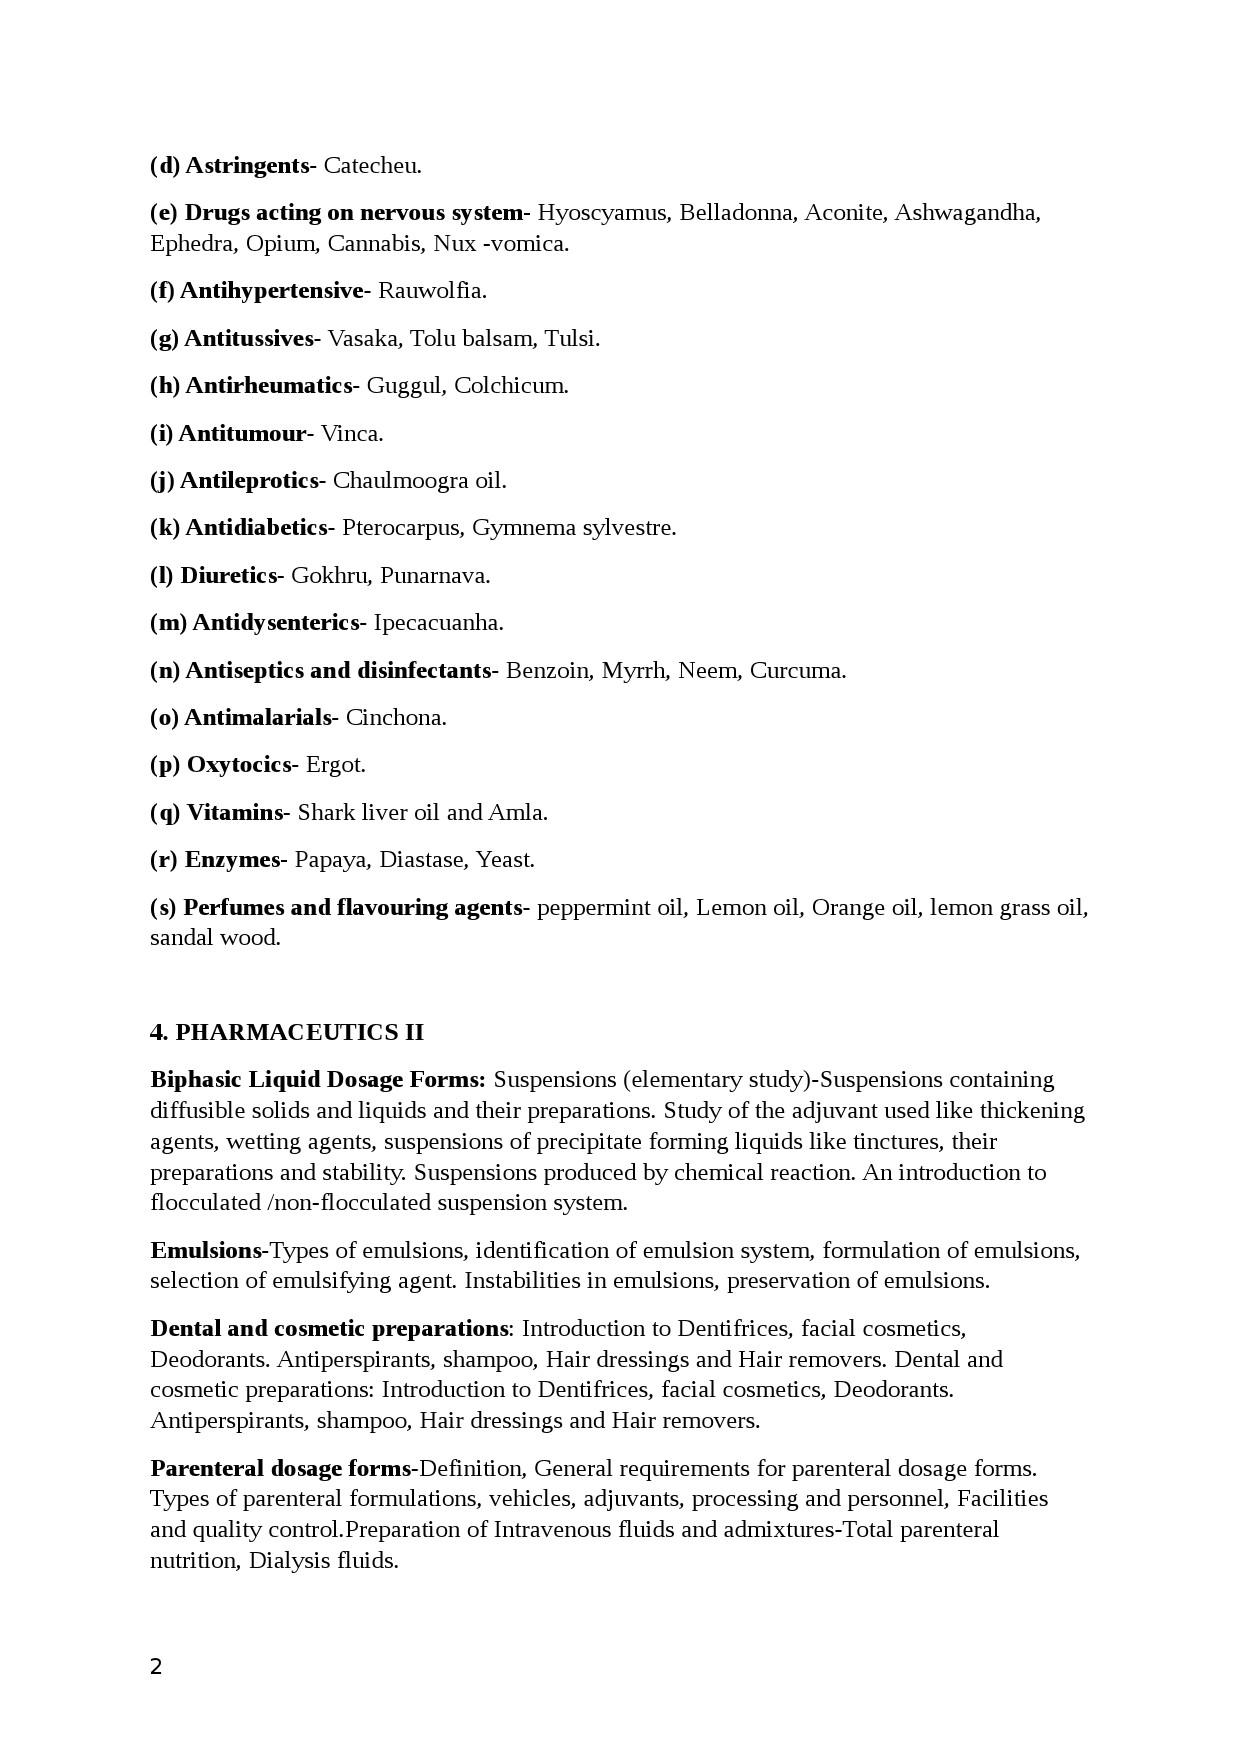 KPSC Syllabus 2021 Pharmacist Grade II - Notification Image 2